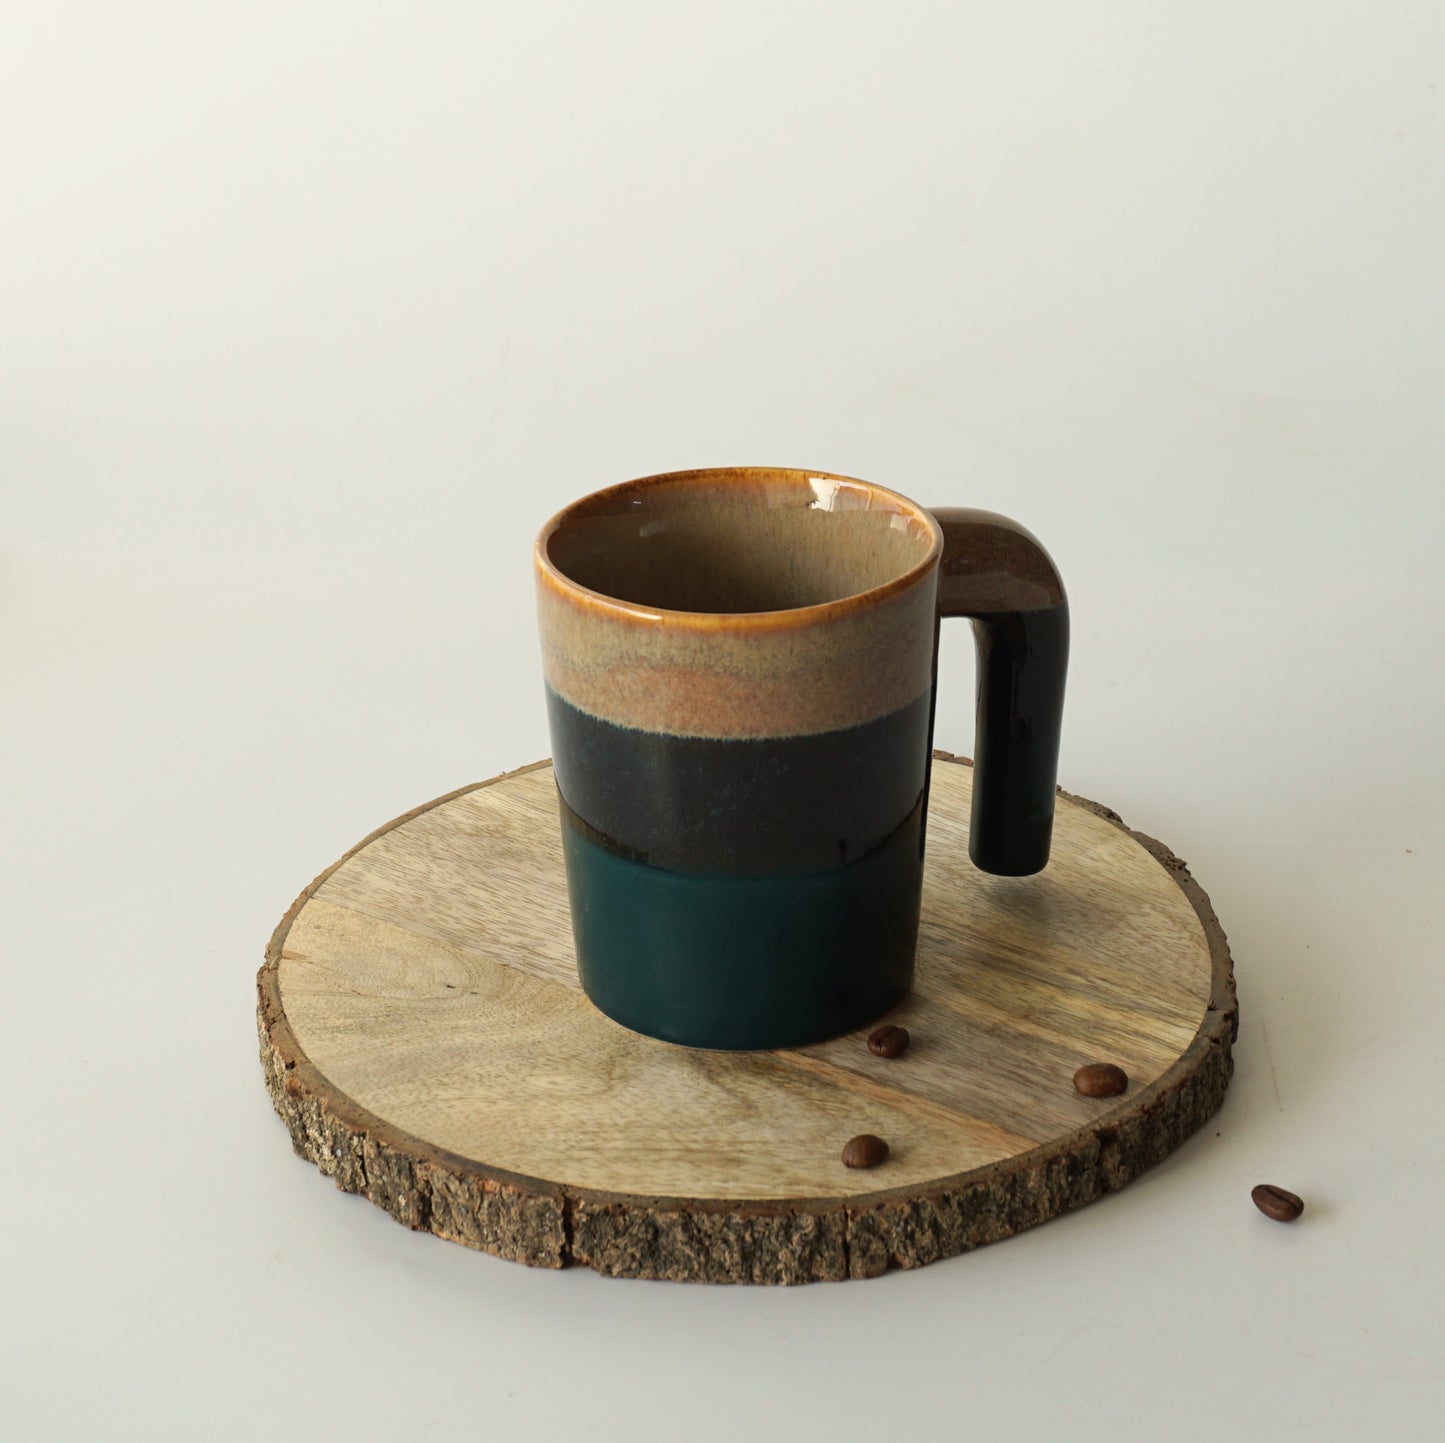 The Ordinary Coffee Mug